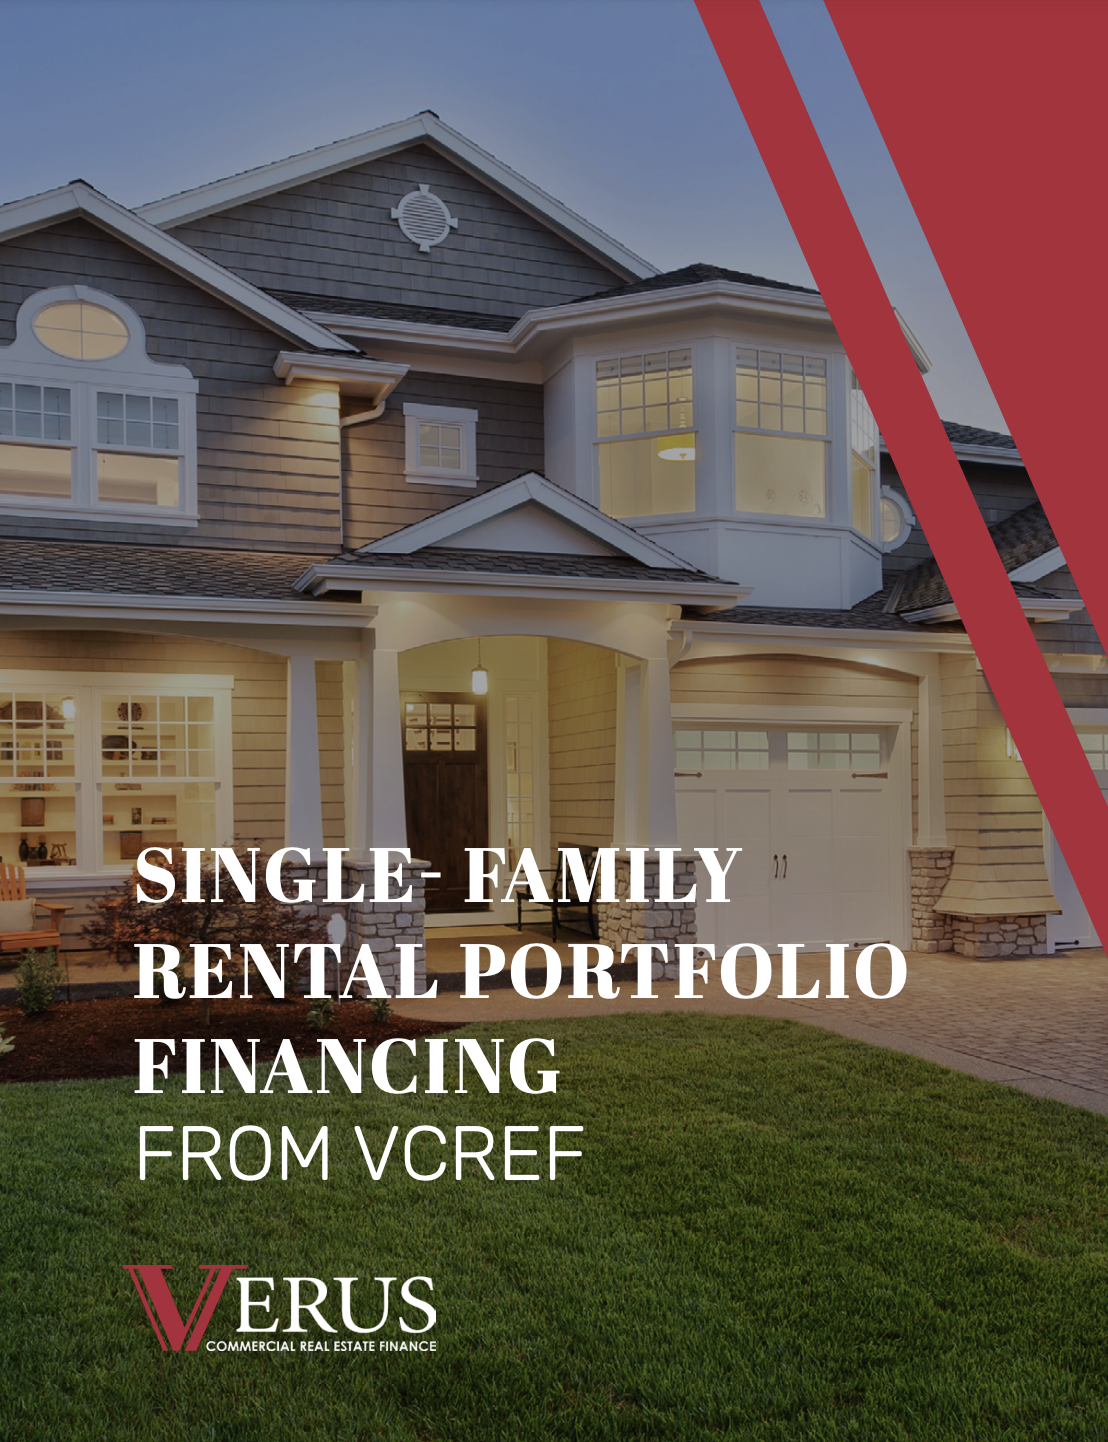 Single Family Rental Portfolio Financing